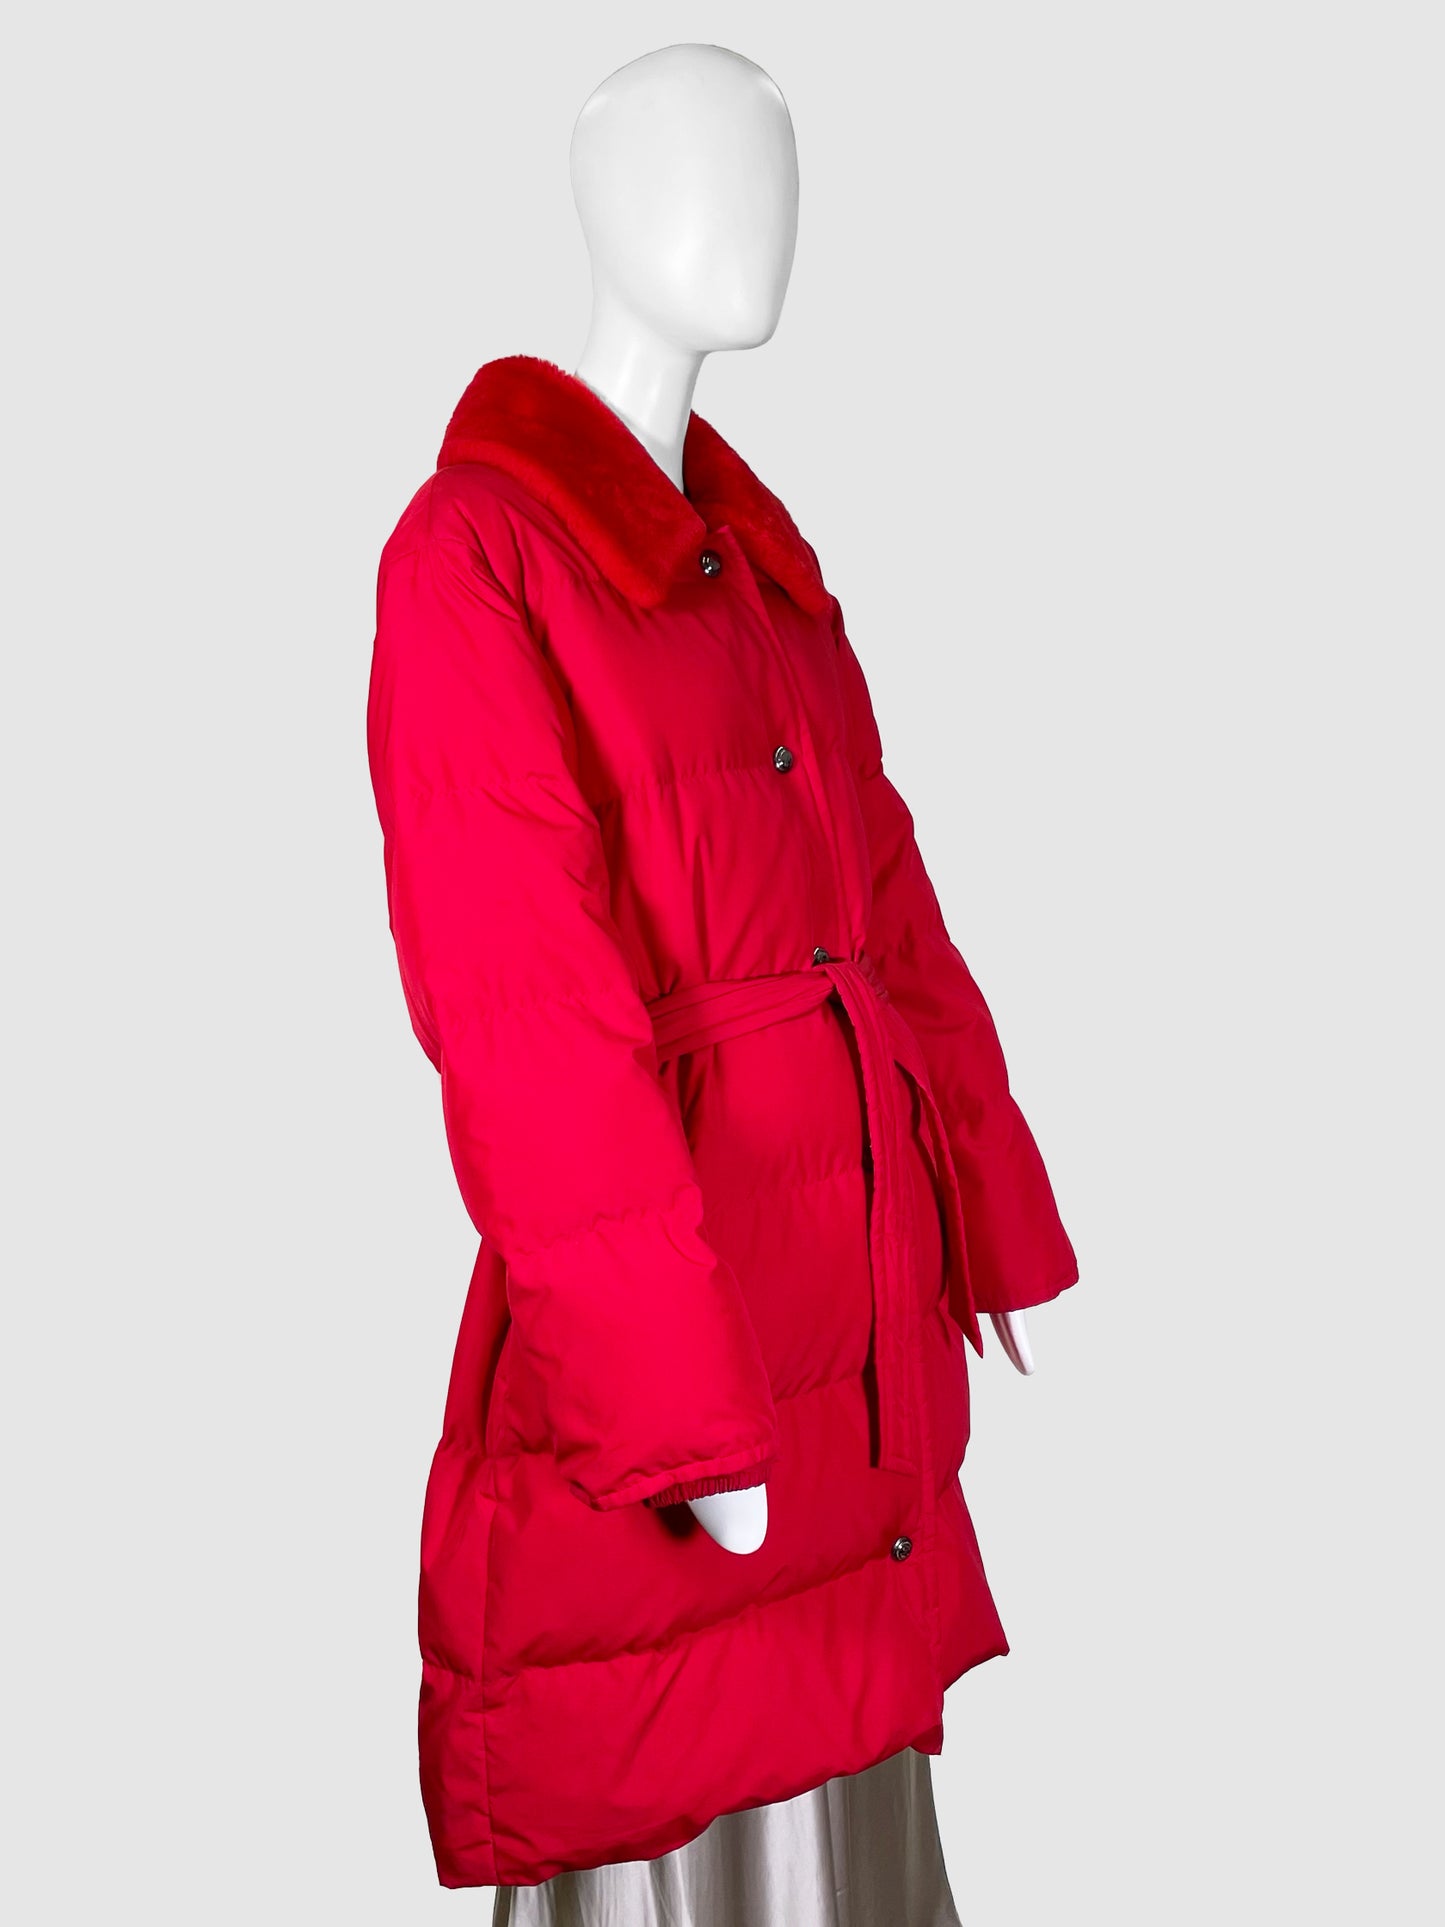 Escada Red Puffer Jacket - Size 42